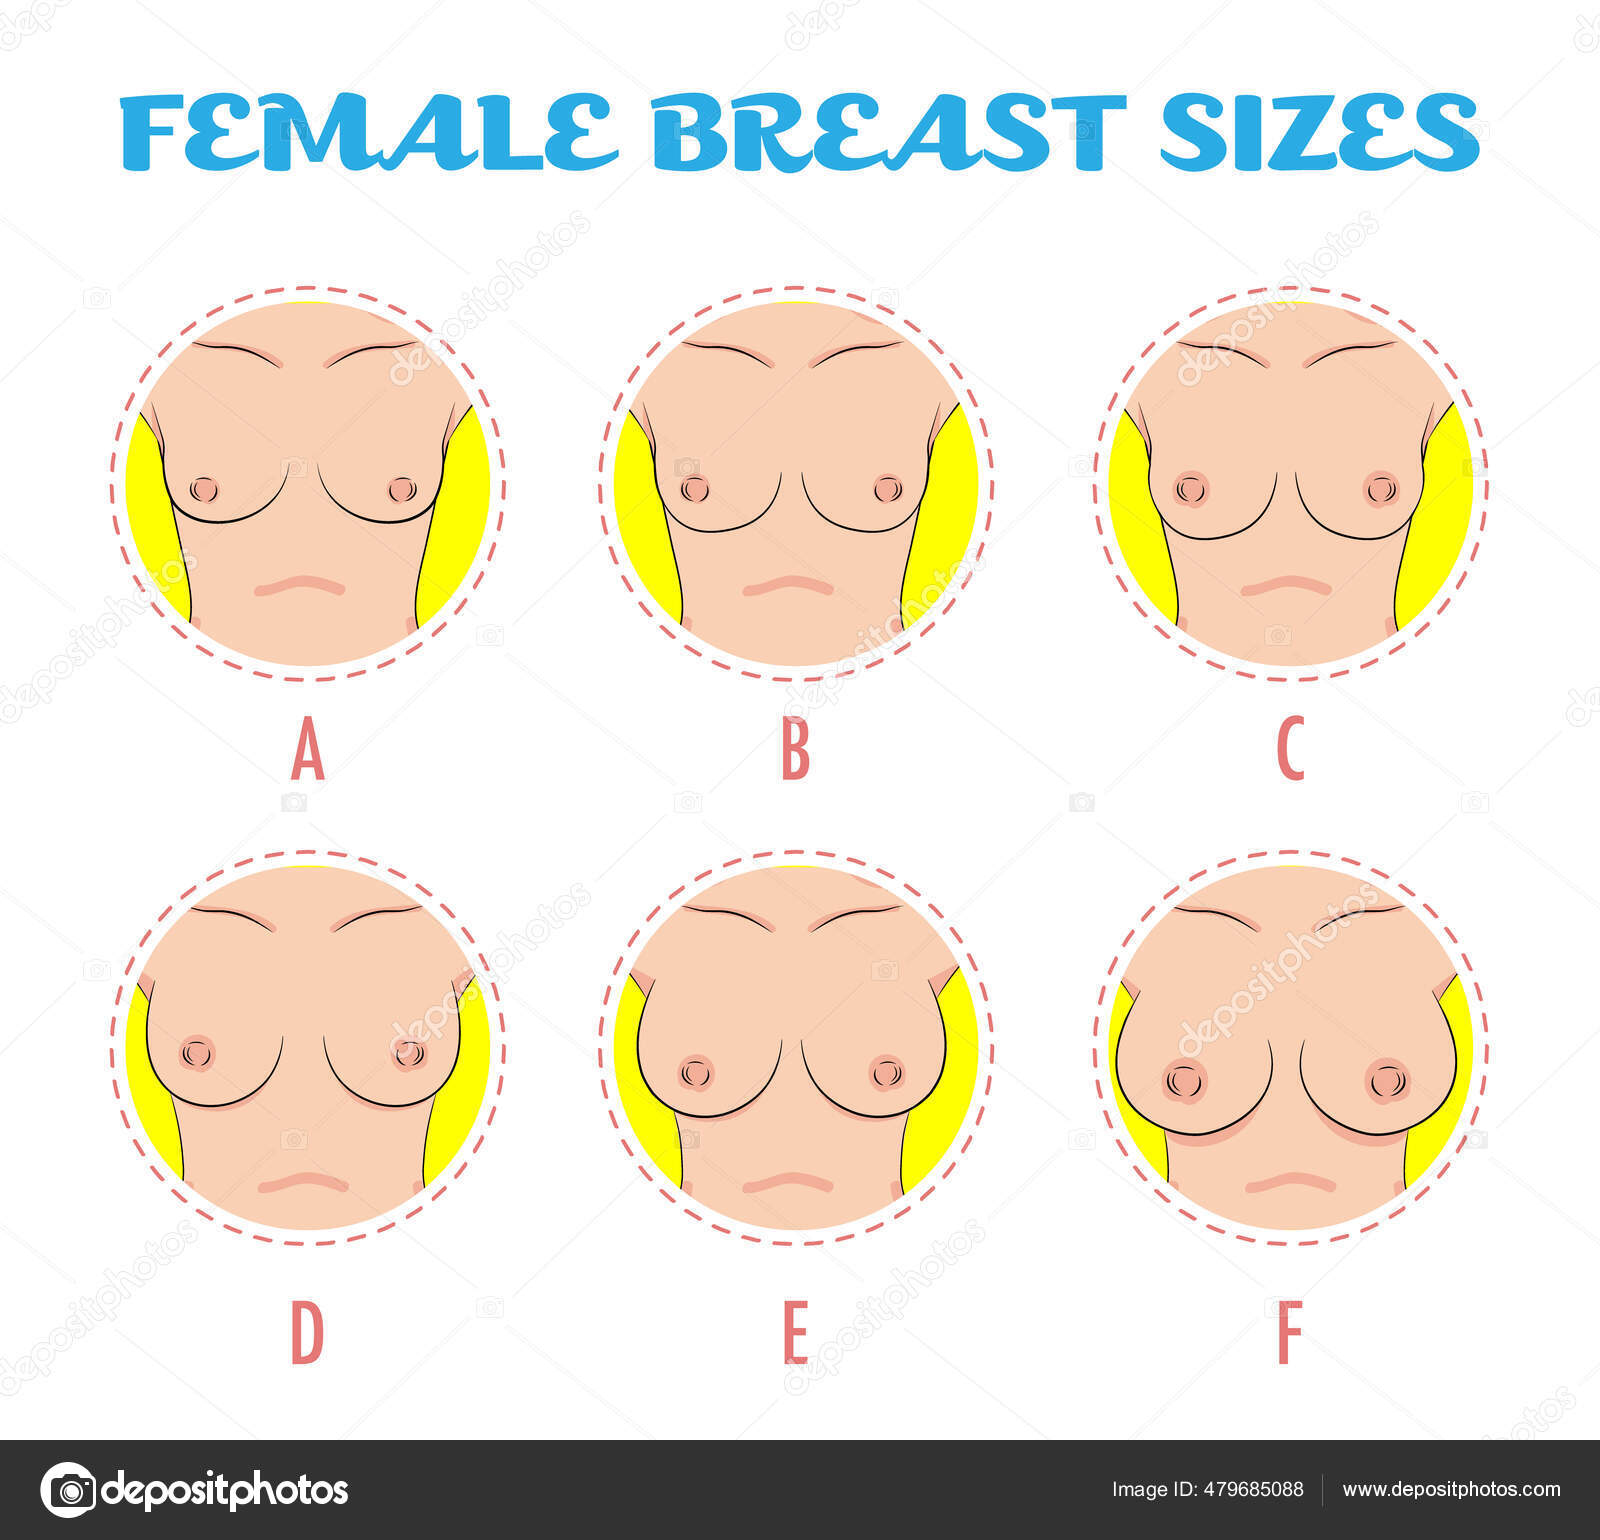 https://st2.depositphotos.com/8051182/47968/v/1600/depositphotos_479685088-stock-illustration-set-colored-icons-different-female.jpg